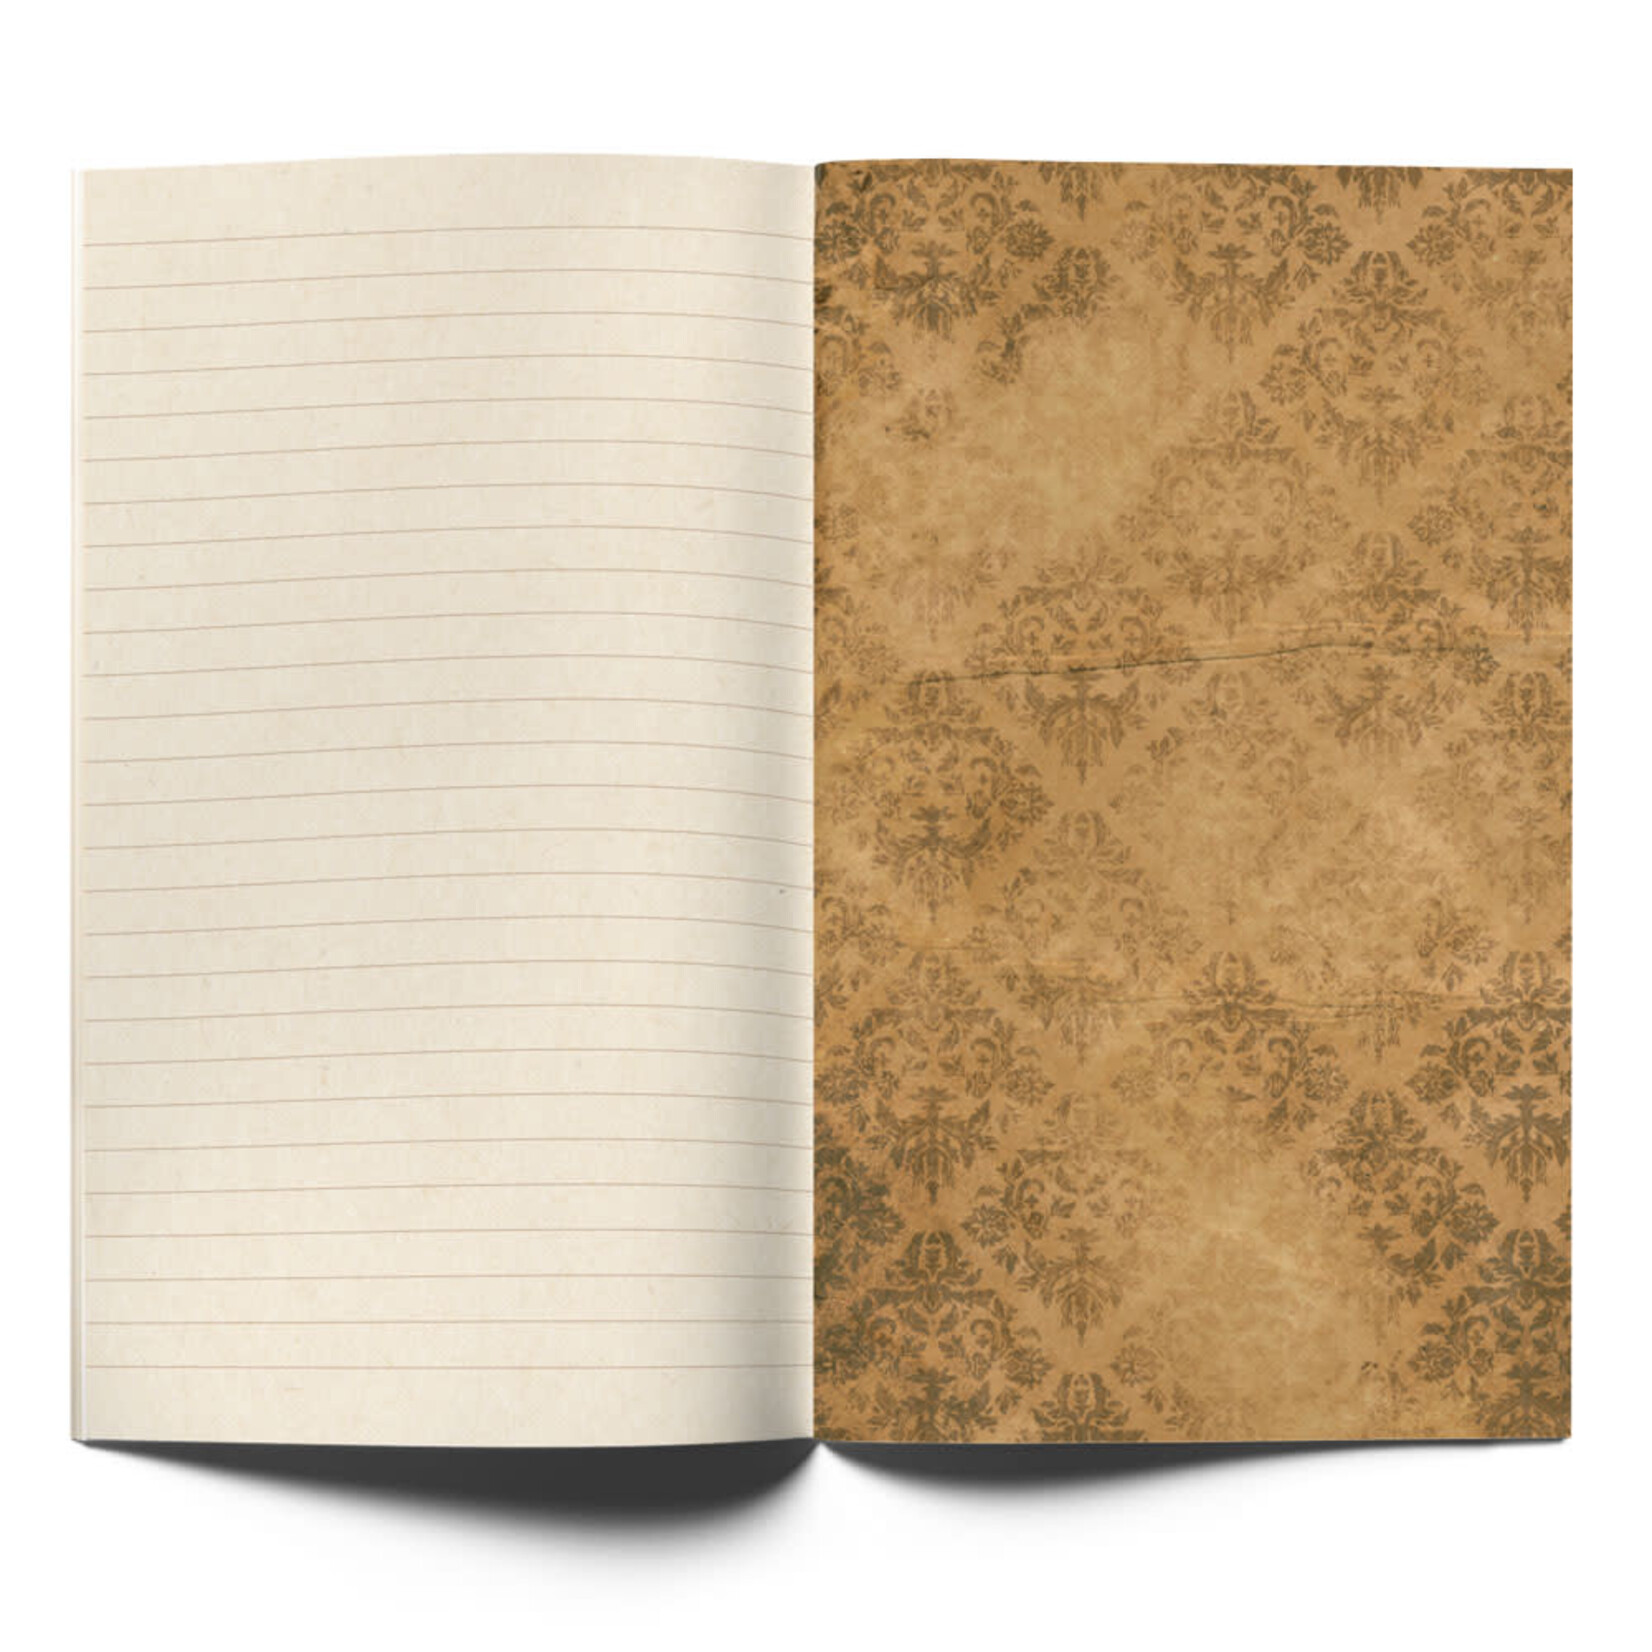 David Arms Wren Softcover Notebook